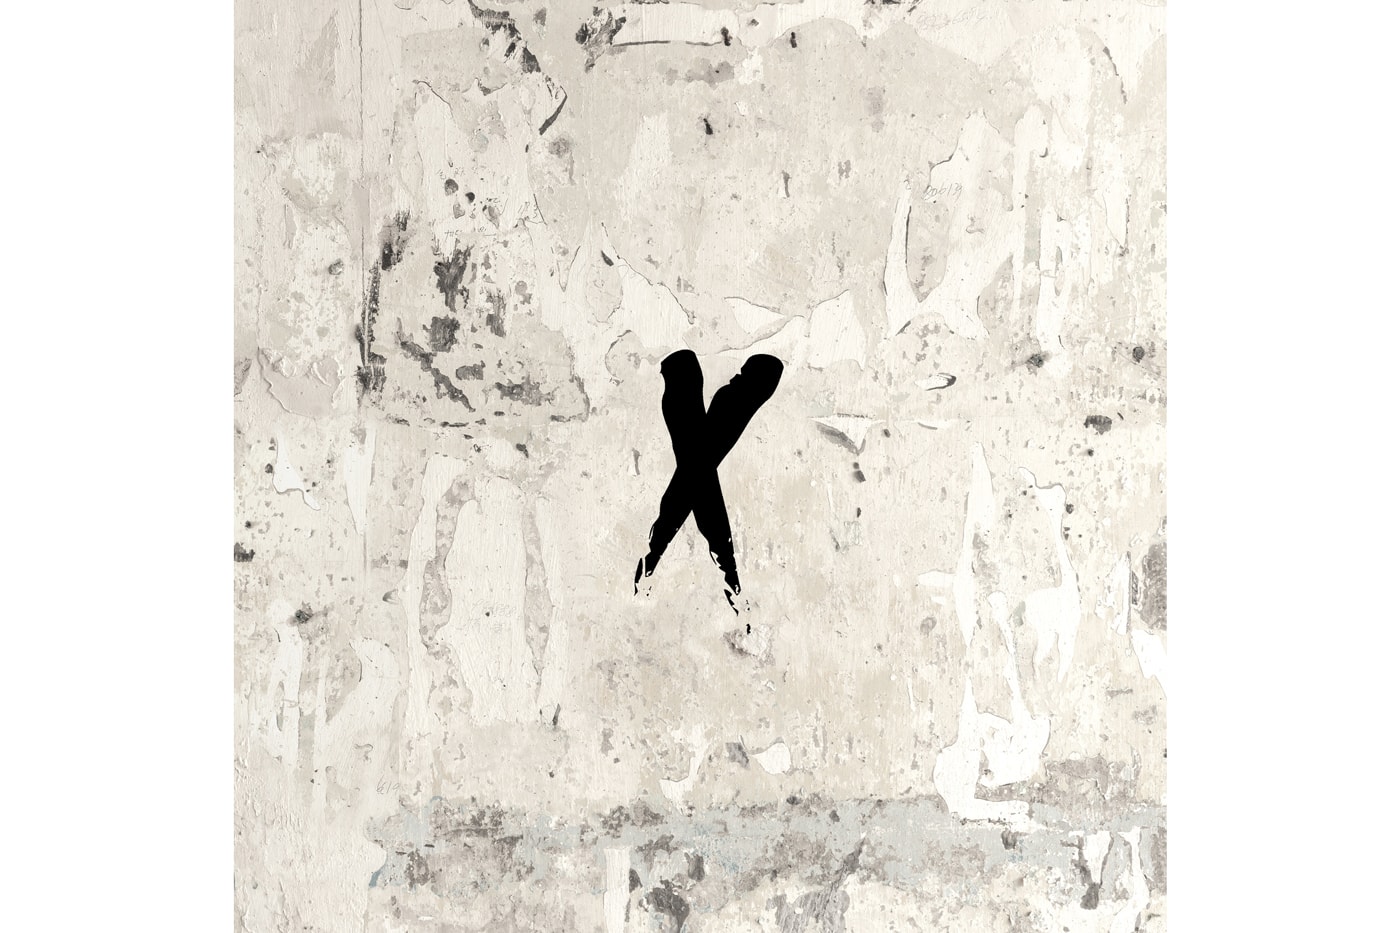 NxWorries Yes Lawd Remix Album Announcement Tracklist Anderson Paak Knxwledge 2017 November 17 Release Date Info